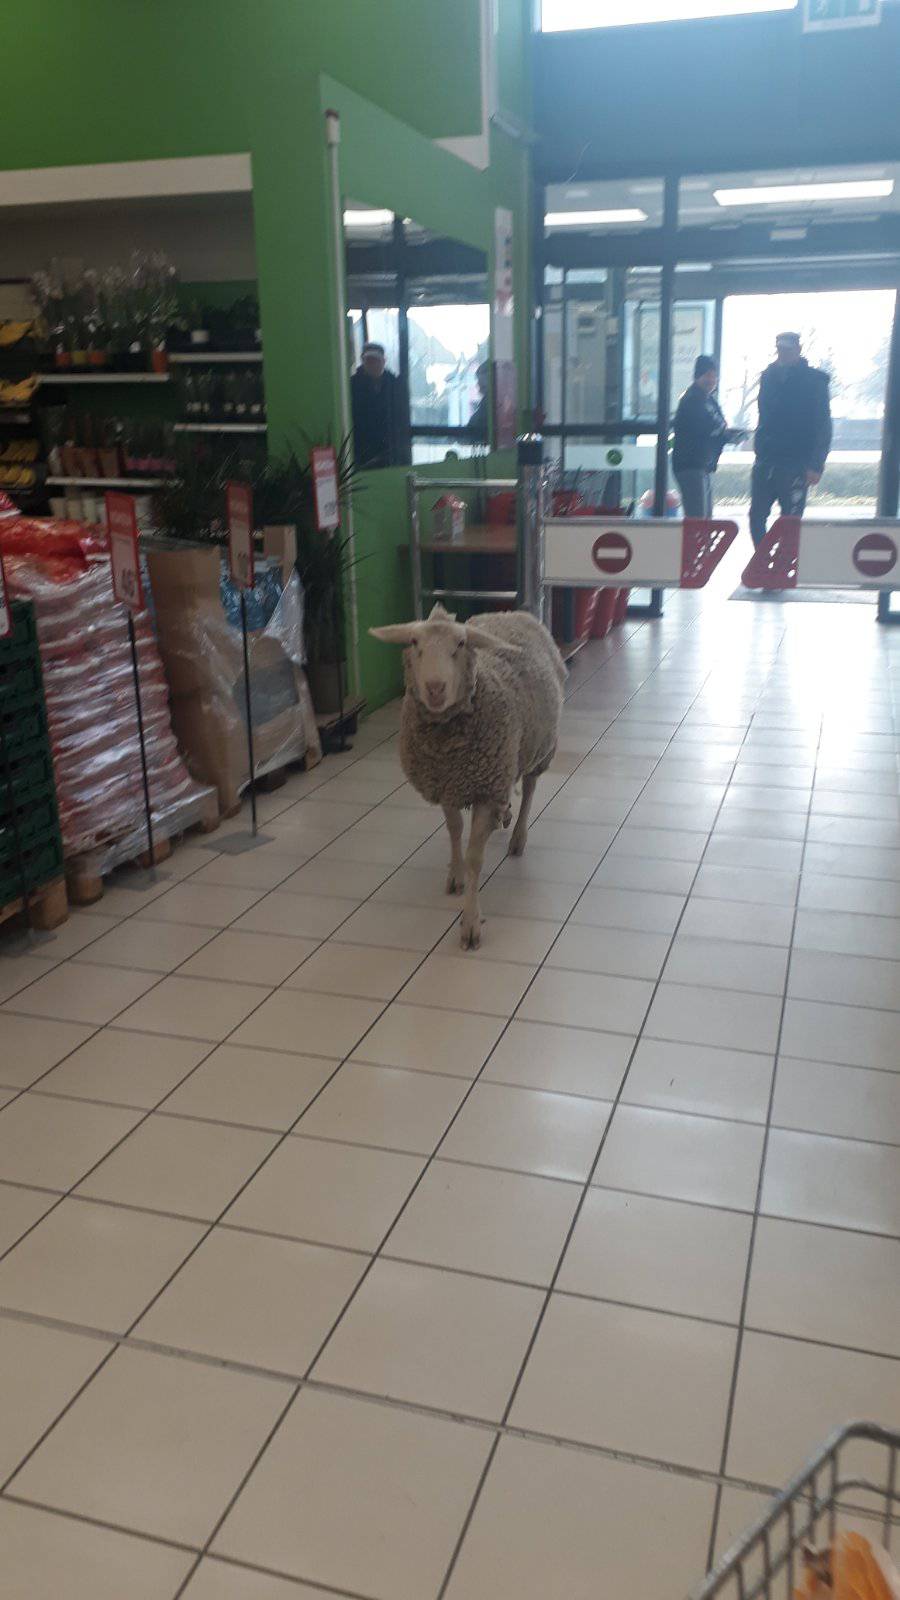 Išla ovca u dućan: Prošetala po trgovini, mesar ju istjerao van